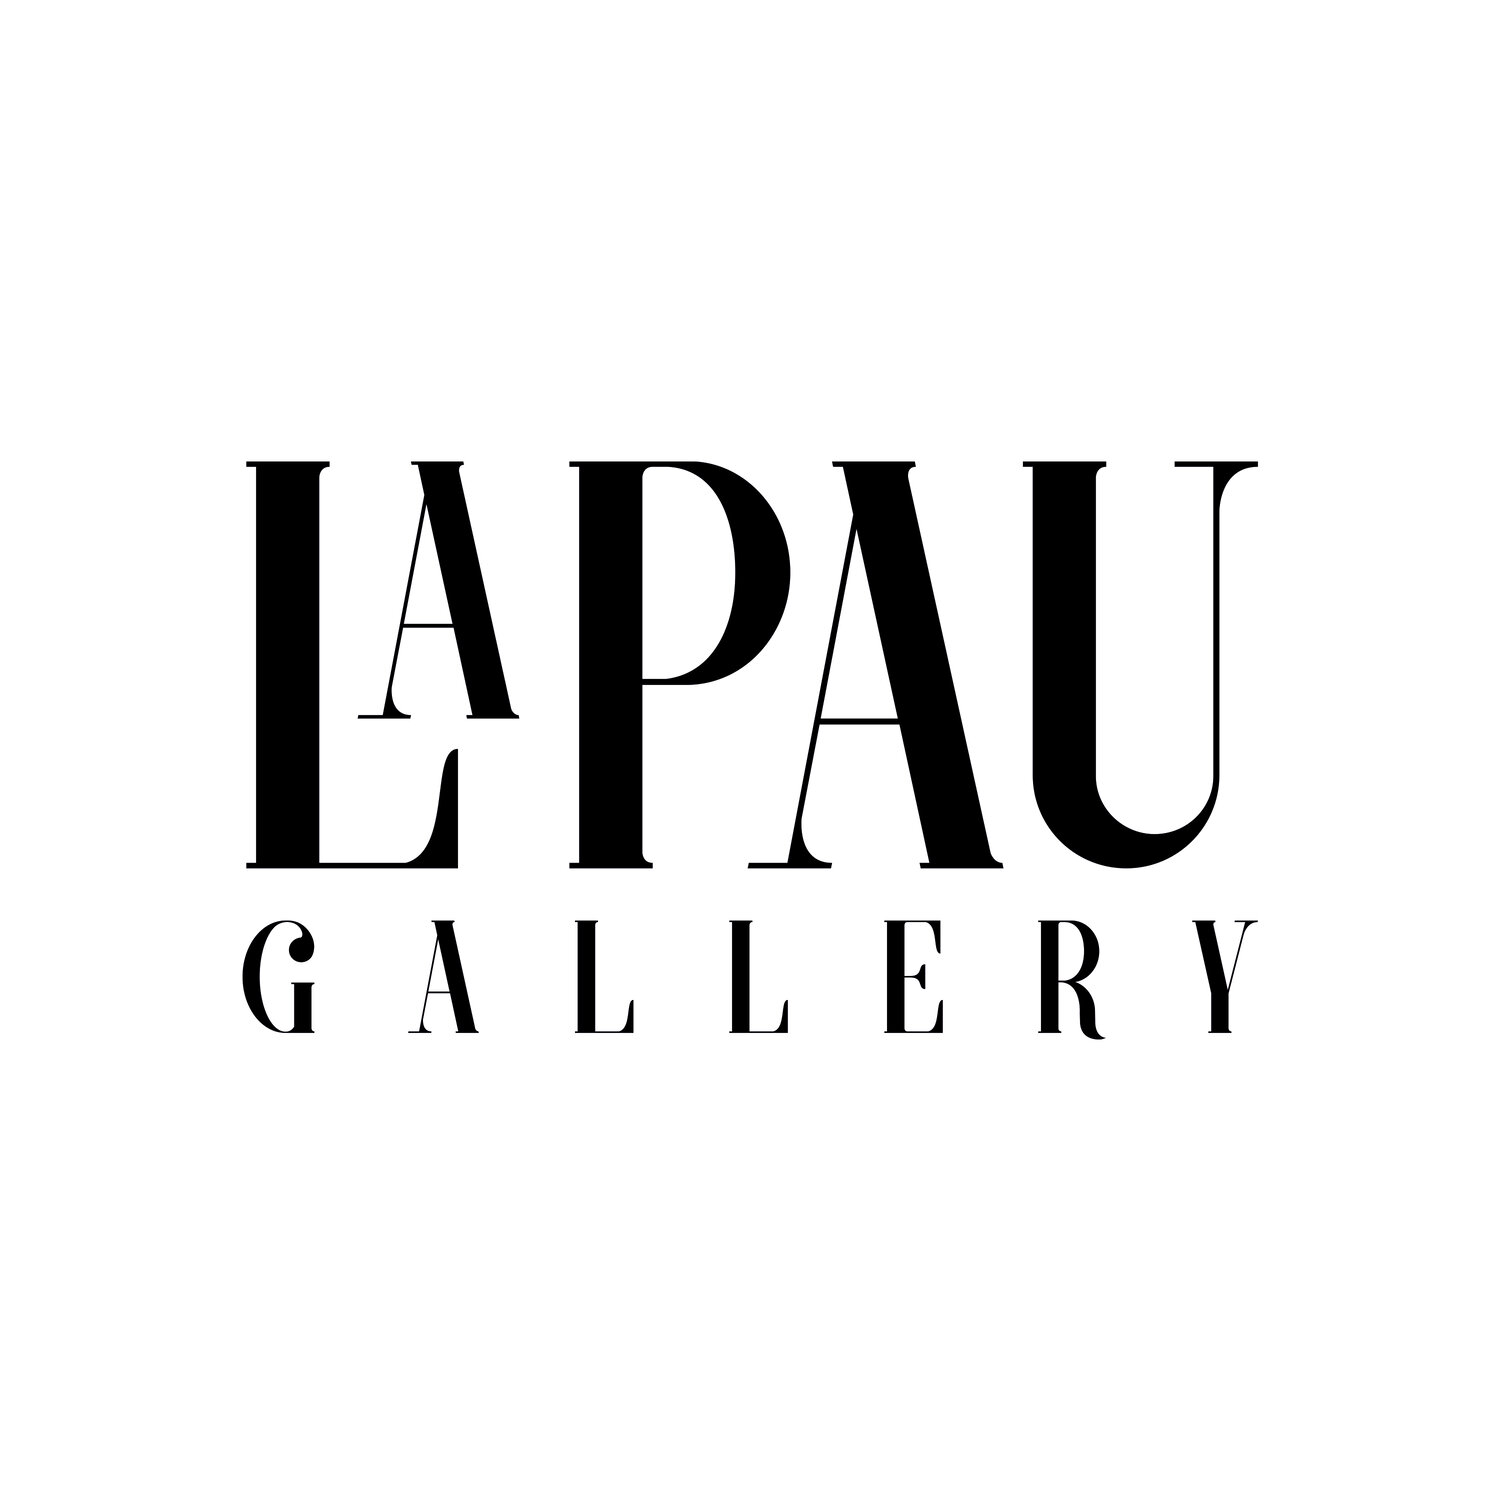 LaPau Gallery